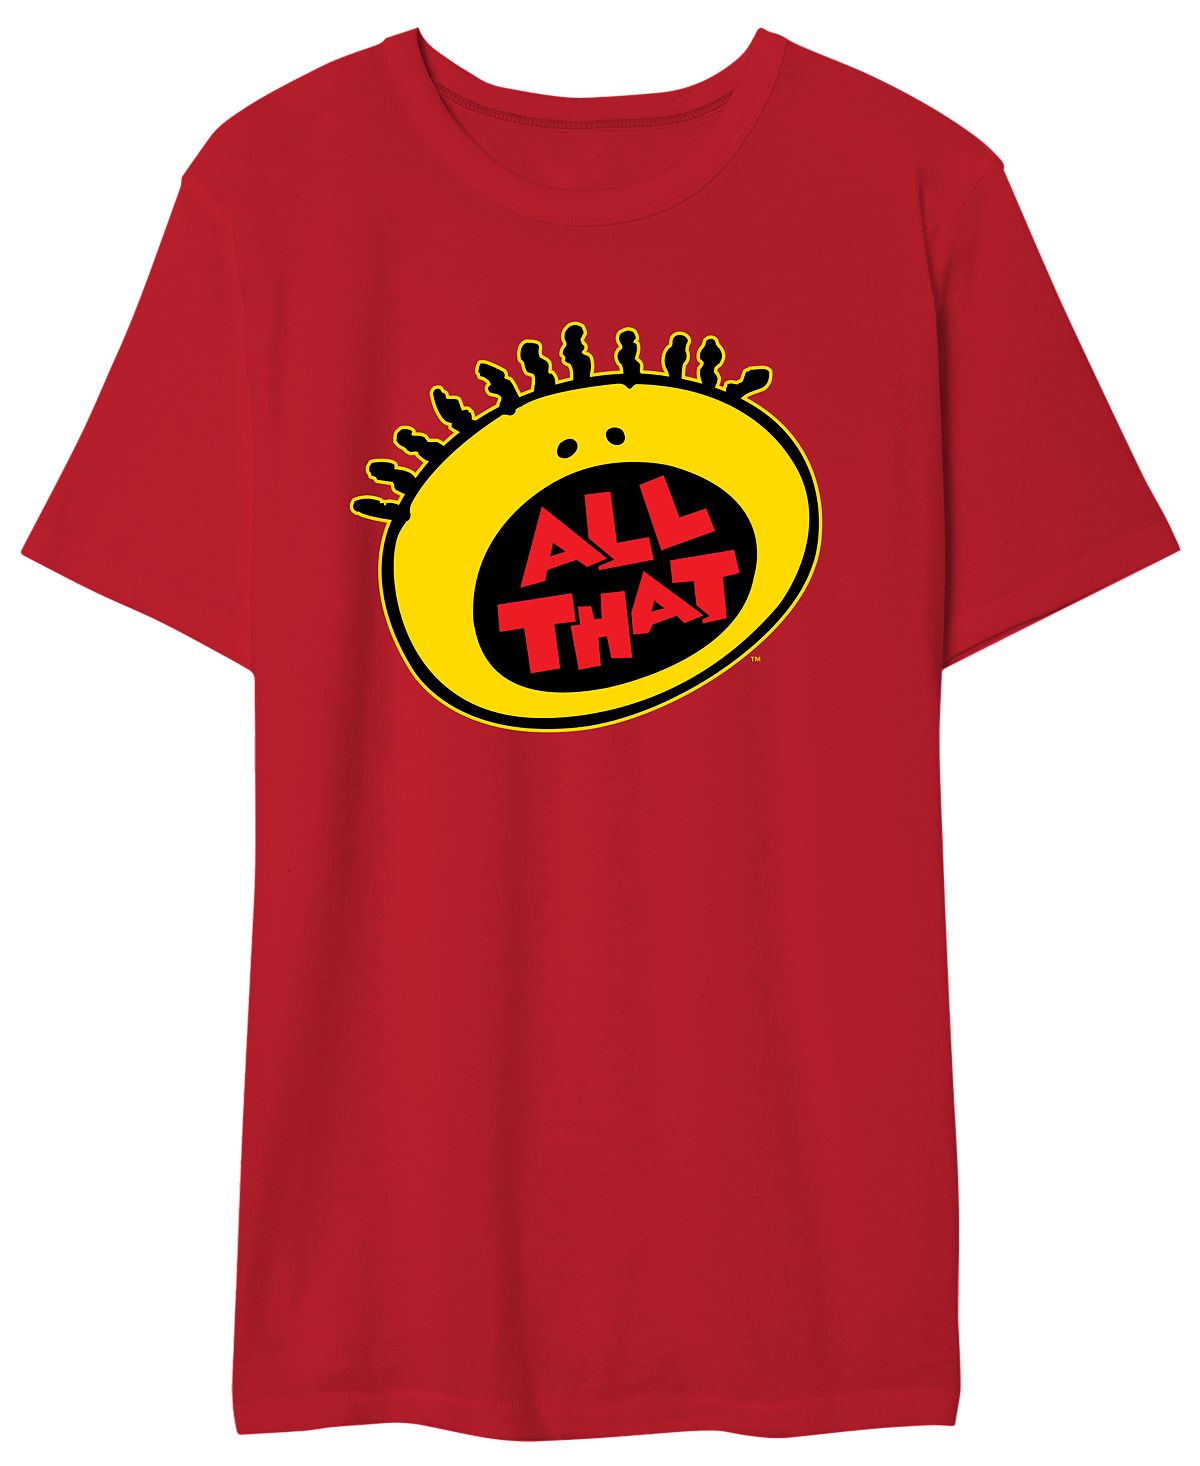 женская футболка с коротким рукавом с графическим принтом Мужская футболка с рисунком all that nickelodeon AIRWAVES, красный